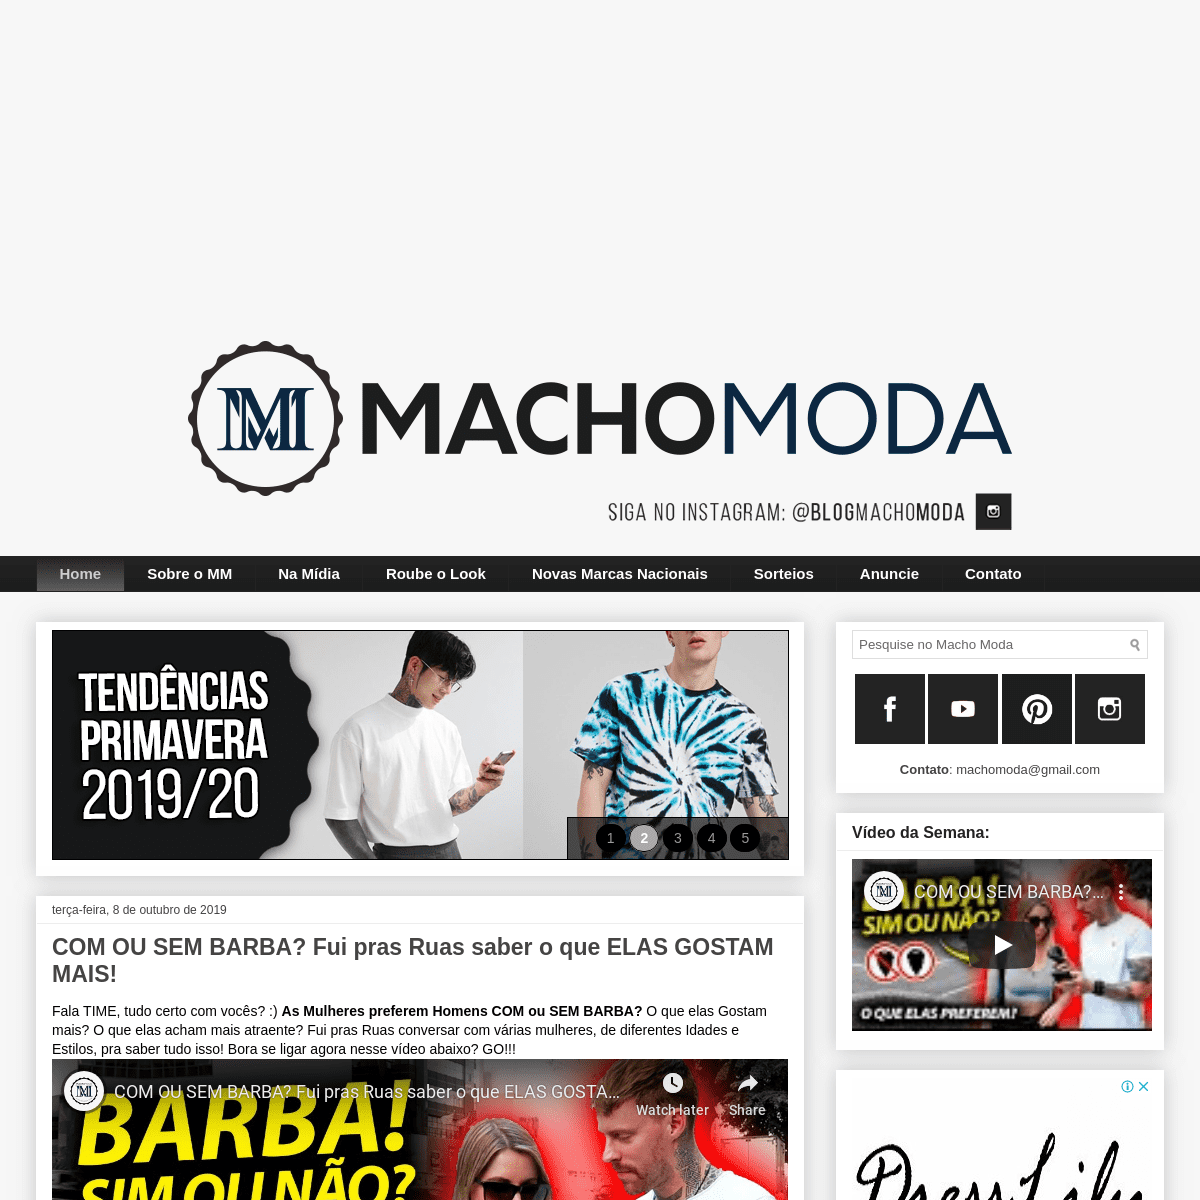 A complete backup of machomoda.com.br